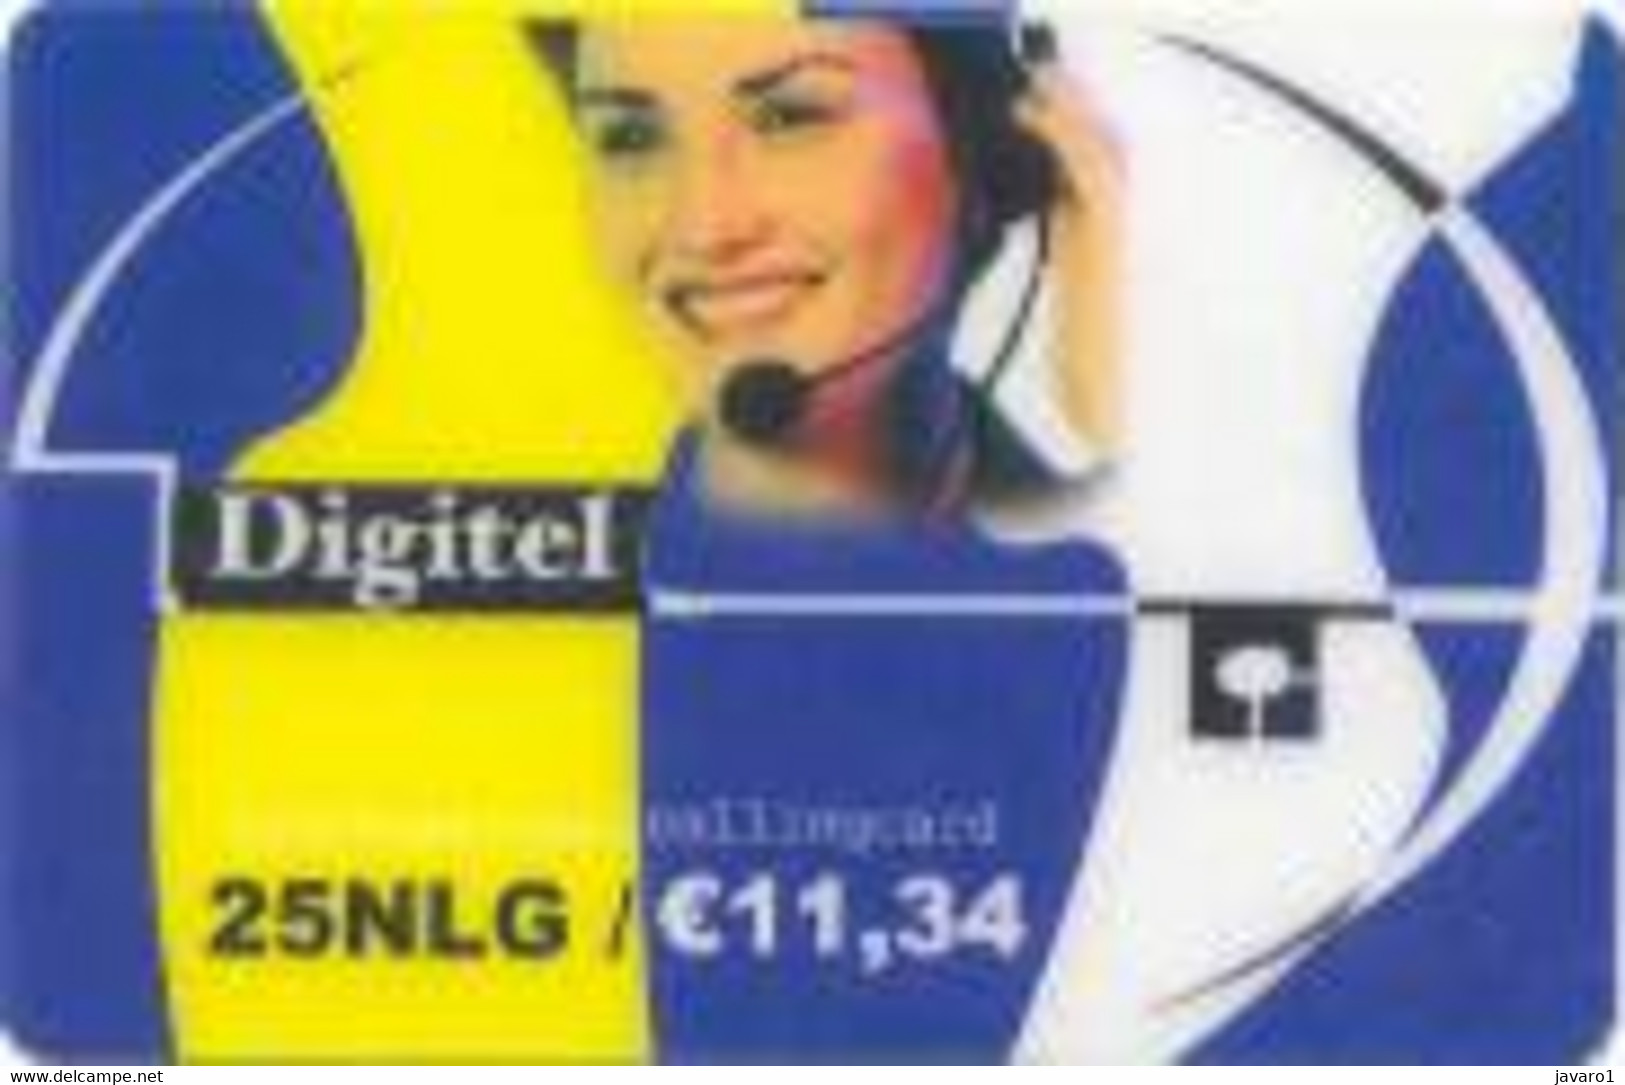 NETHERLAND : NED20 25NLG/e 11,34 DIGITEL Web+Phoning/ WHITE Rev. USED - Zu Identifizieren